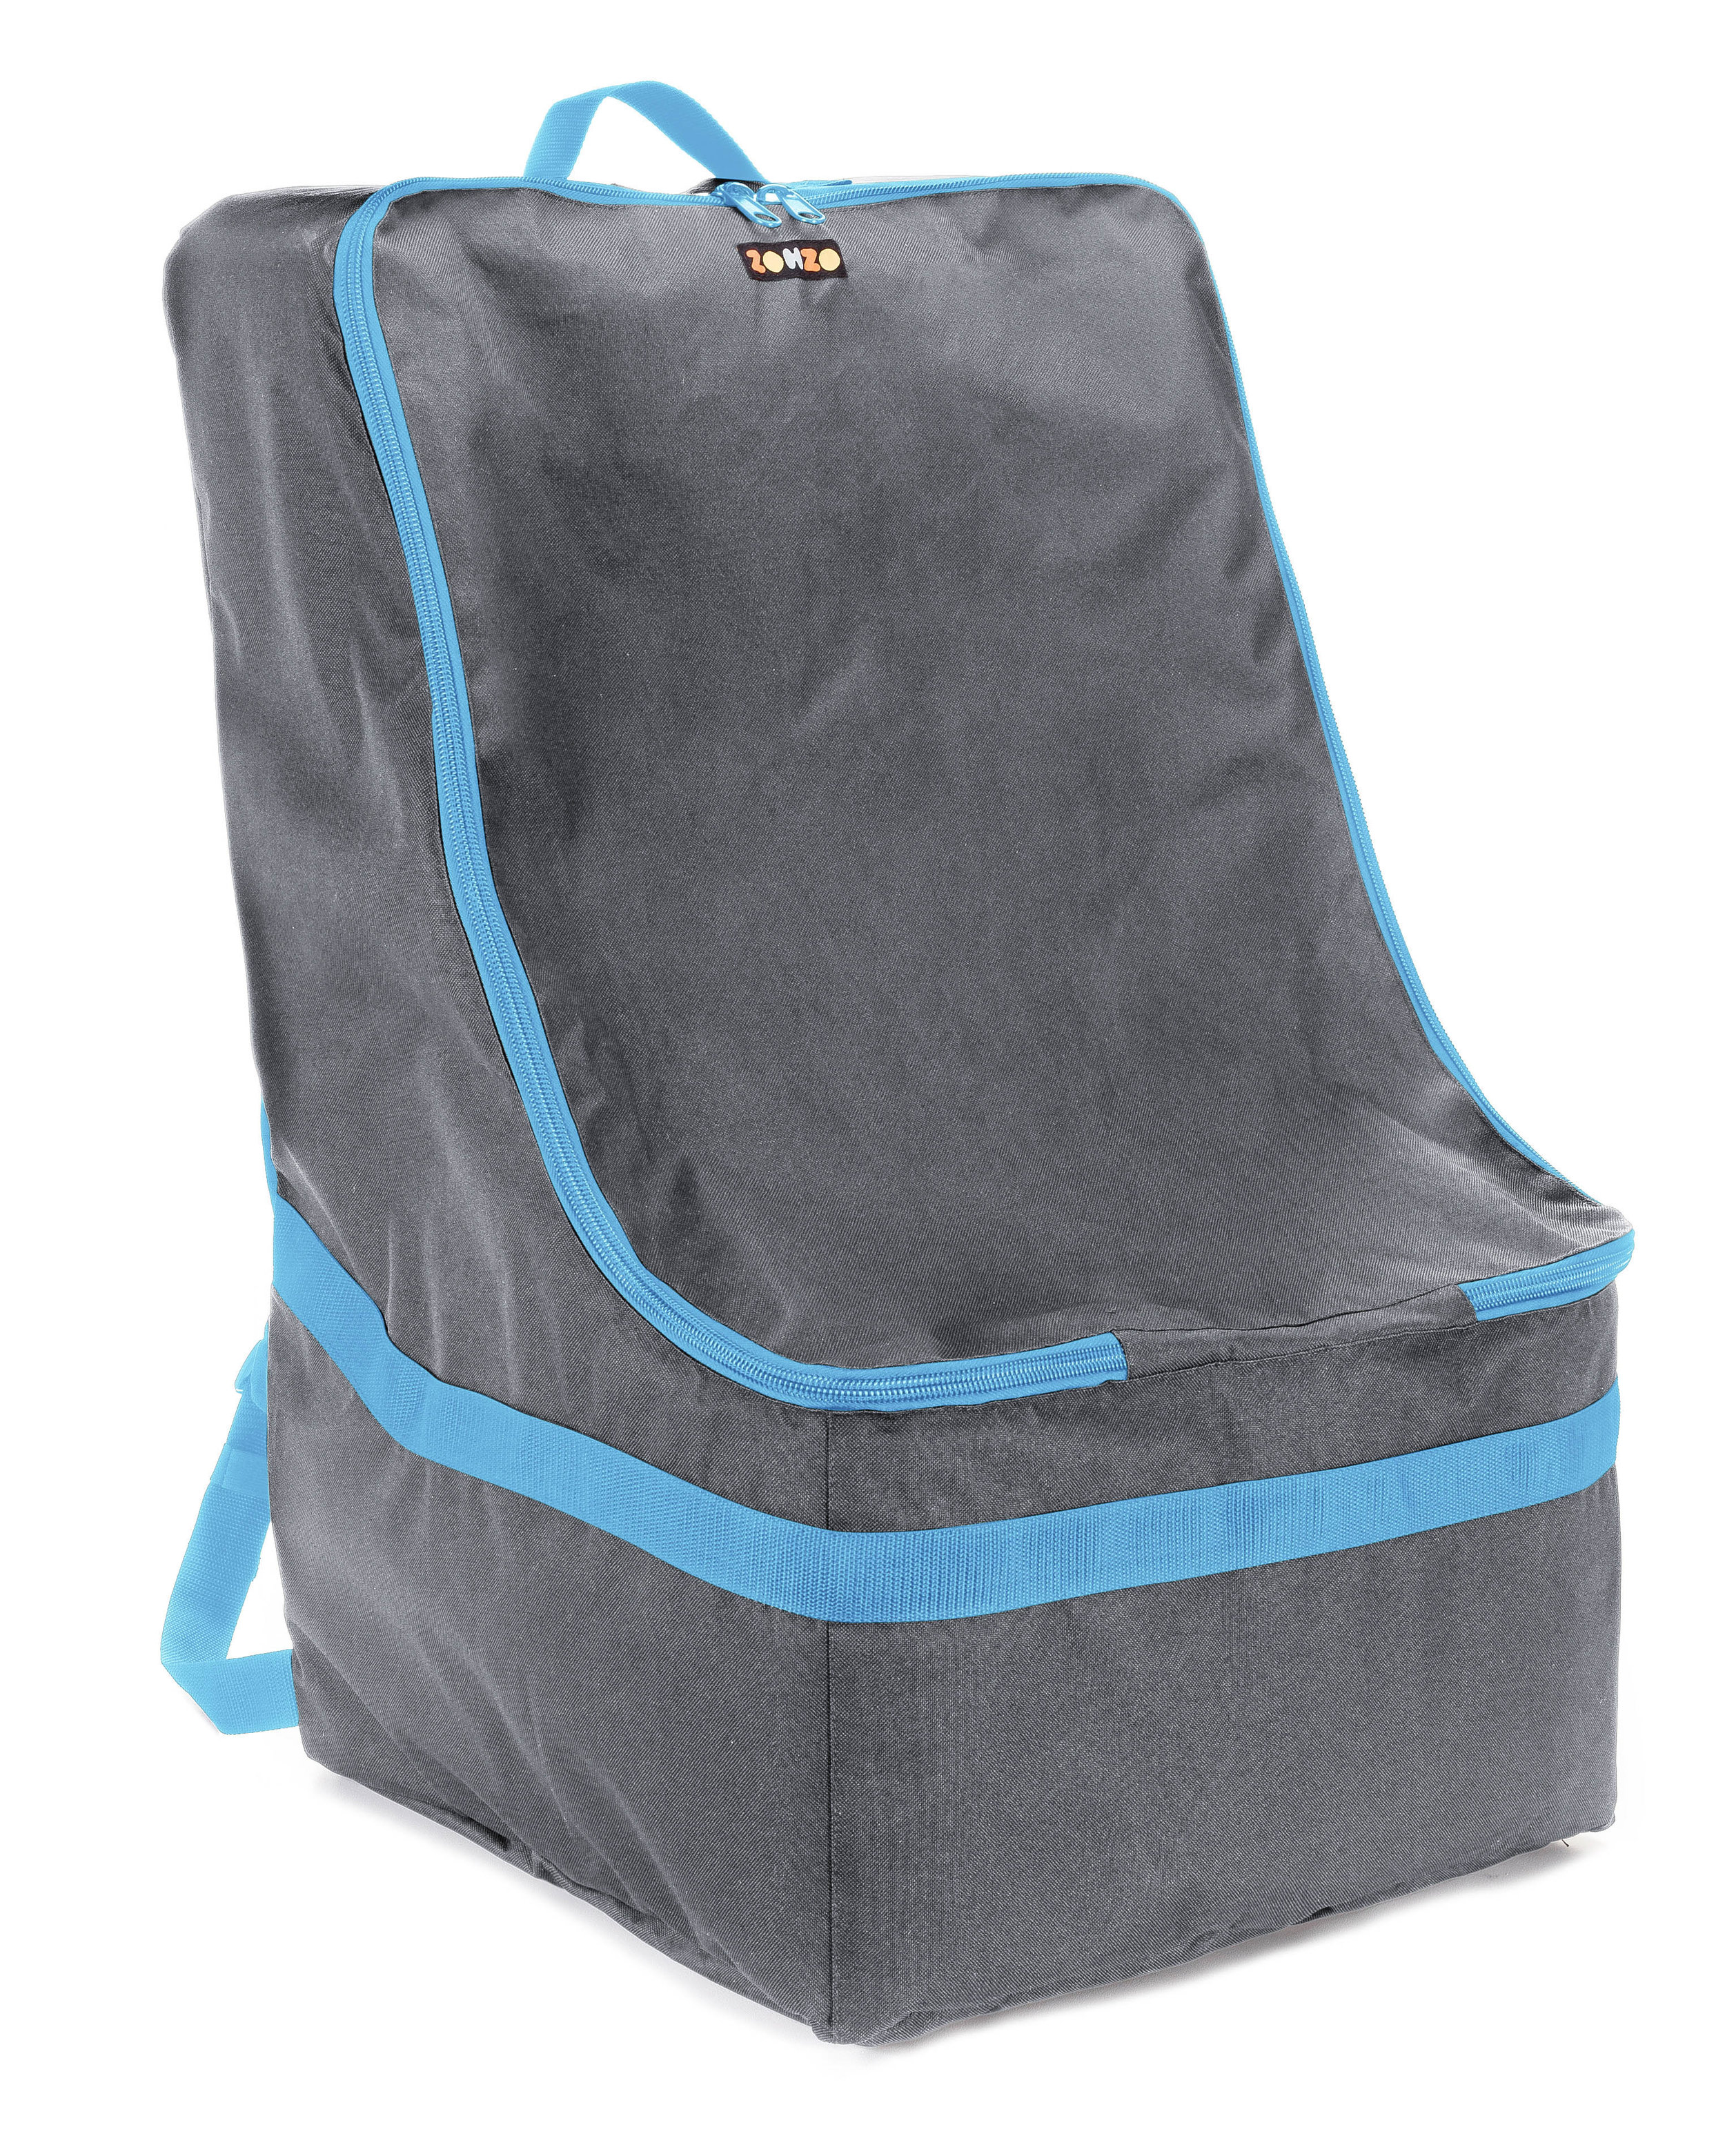 Zohzo Car Seat Travel Bag Compatibility Chart